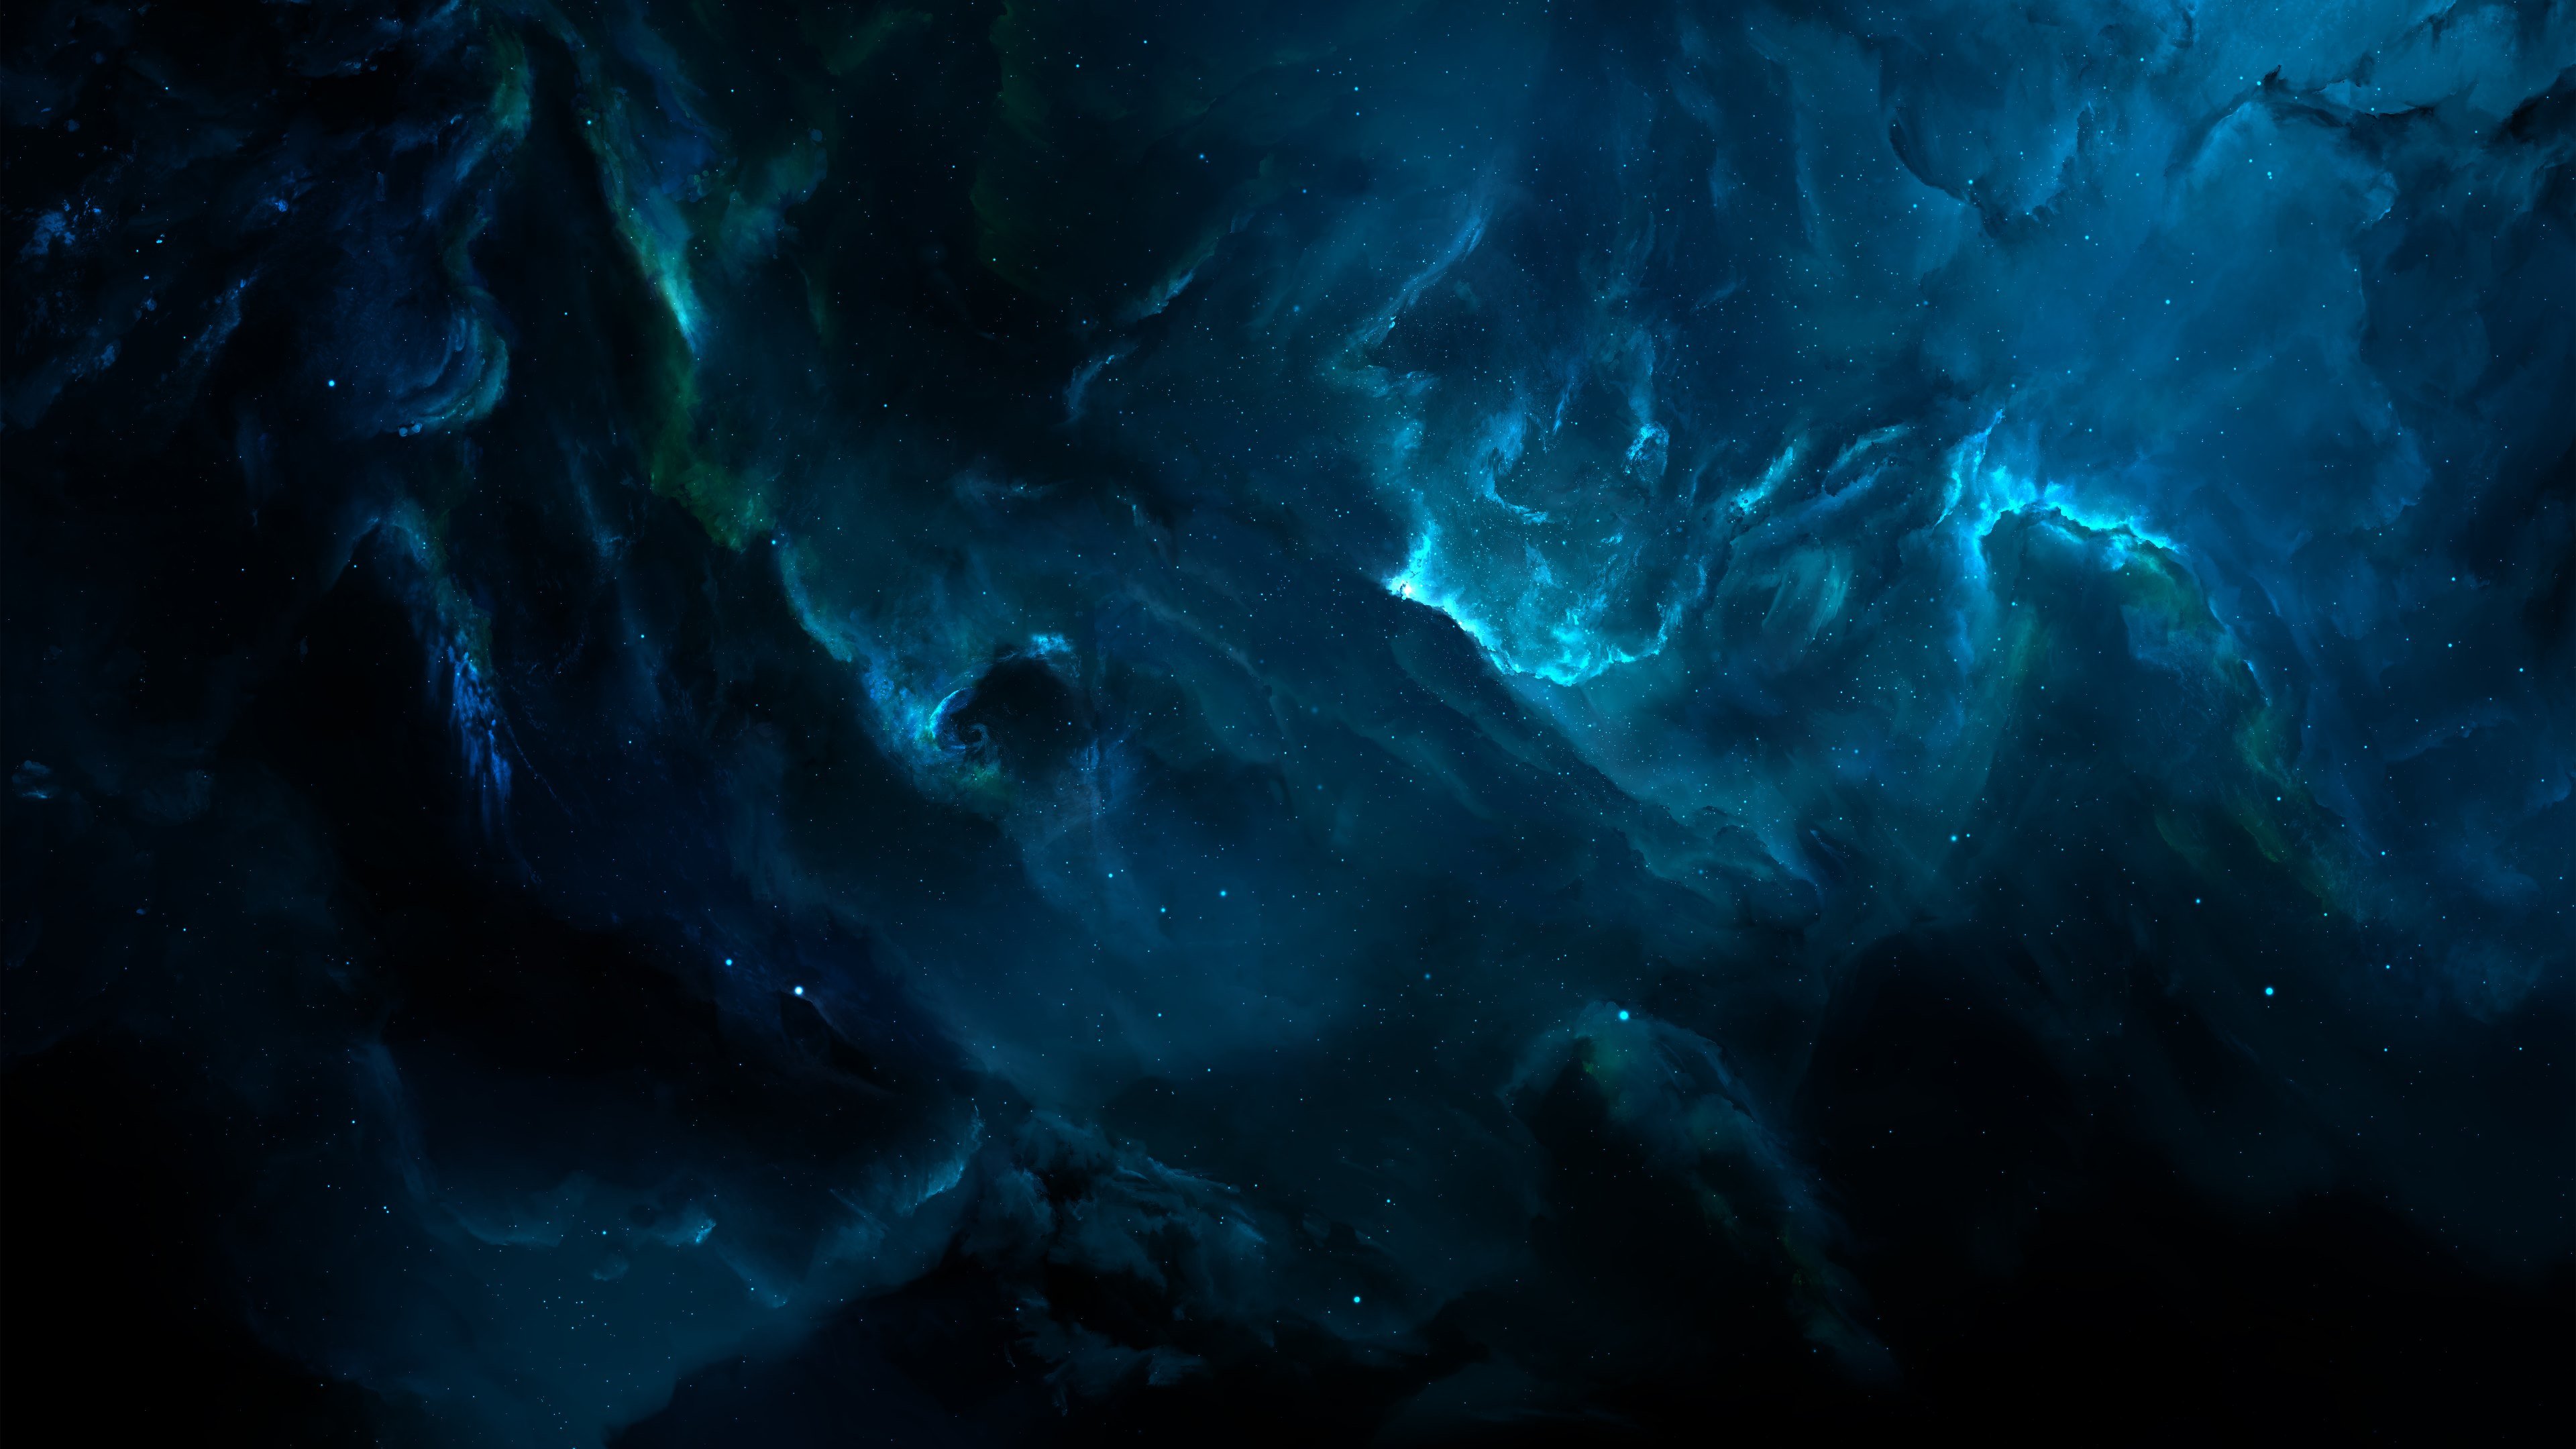 Atlantis Nebula Klyck Nebula HD Wallpapers 4K Wallpapers